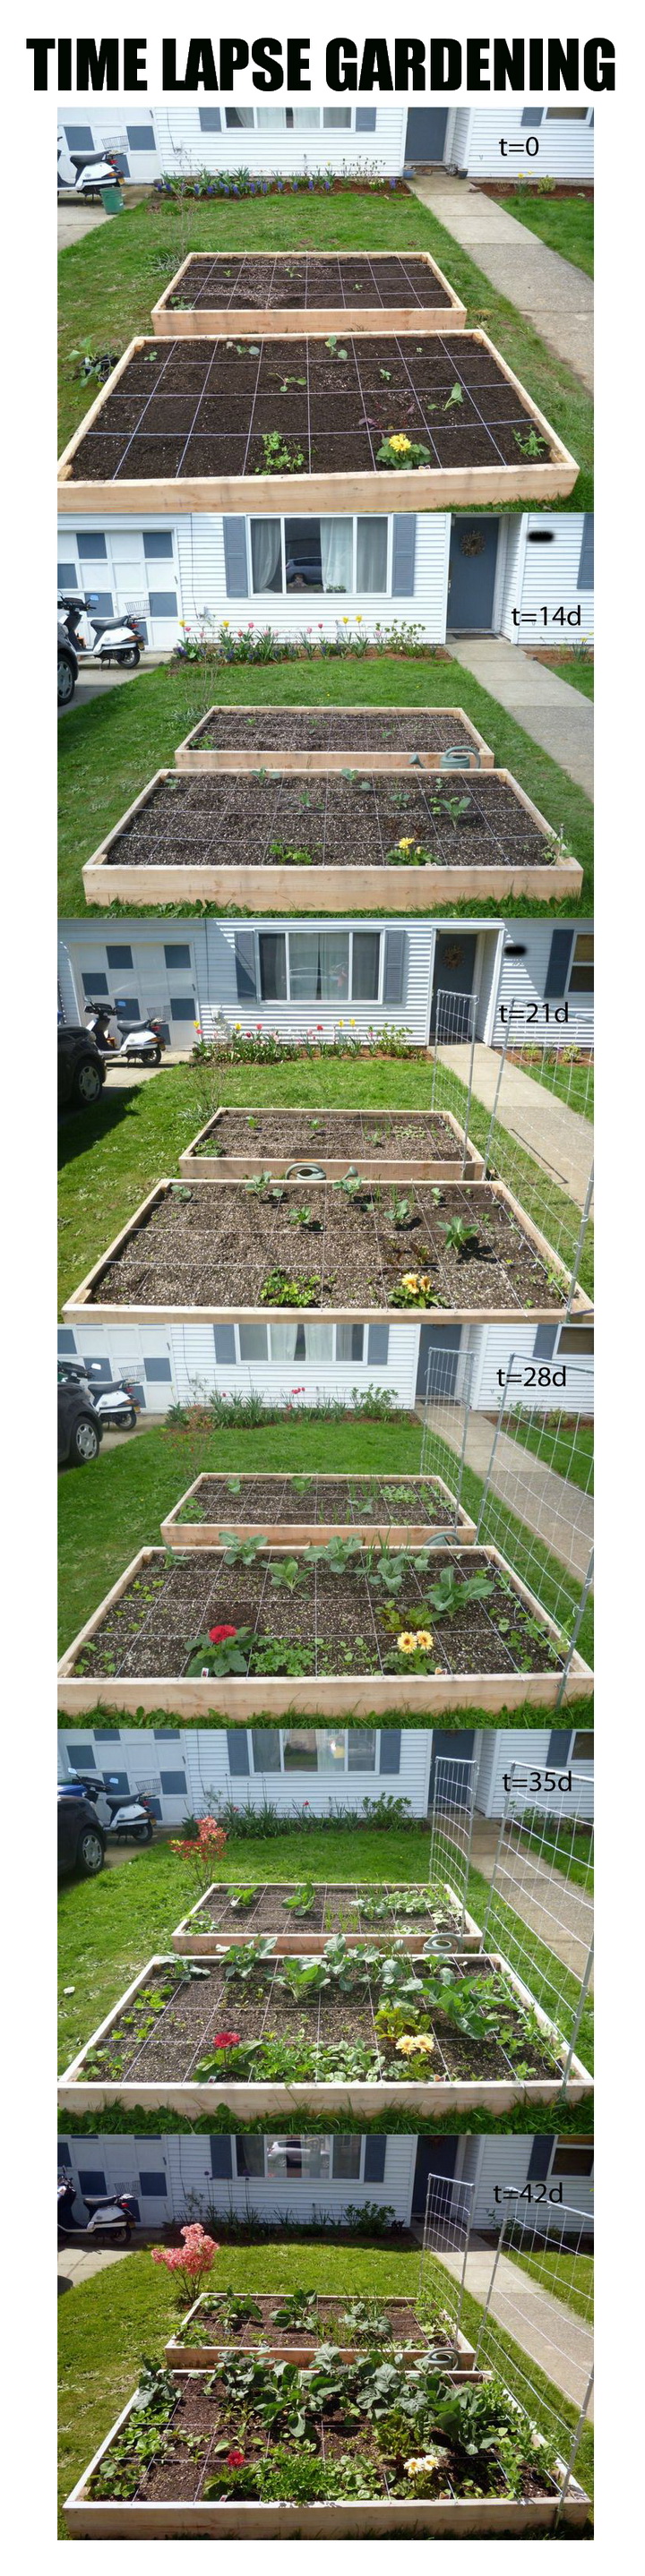 time lapse square foot gardening